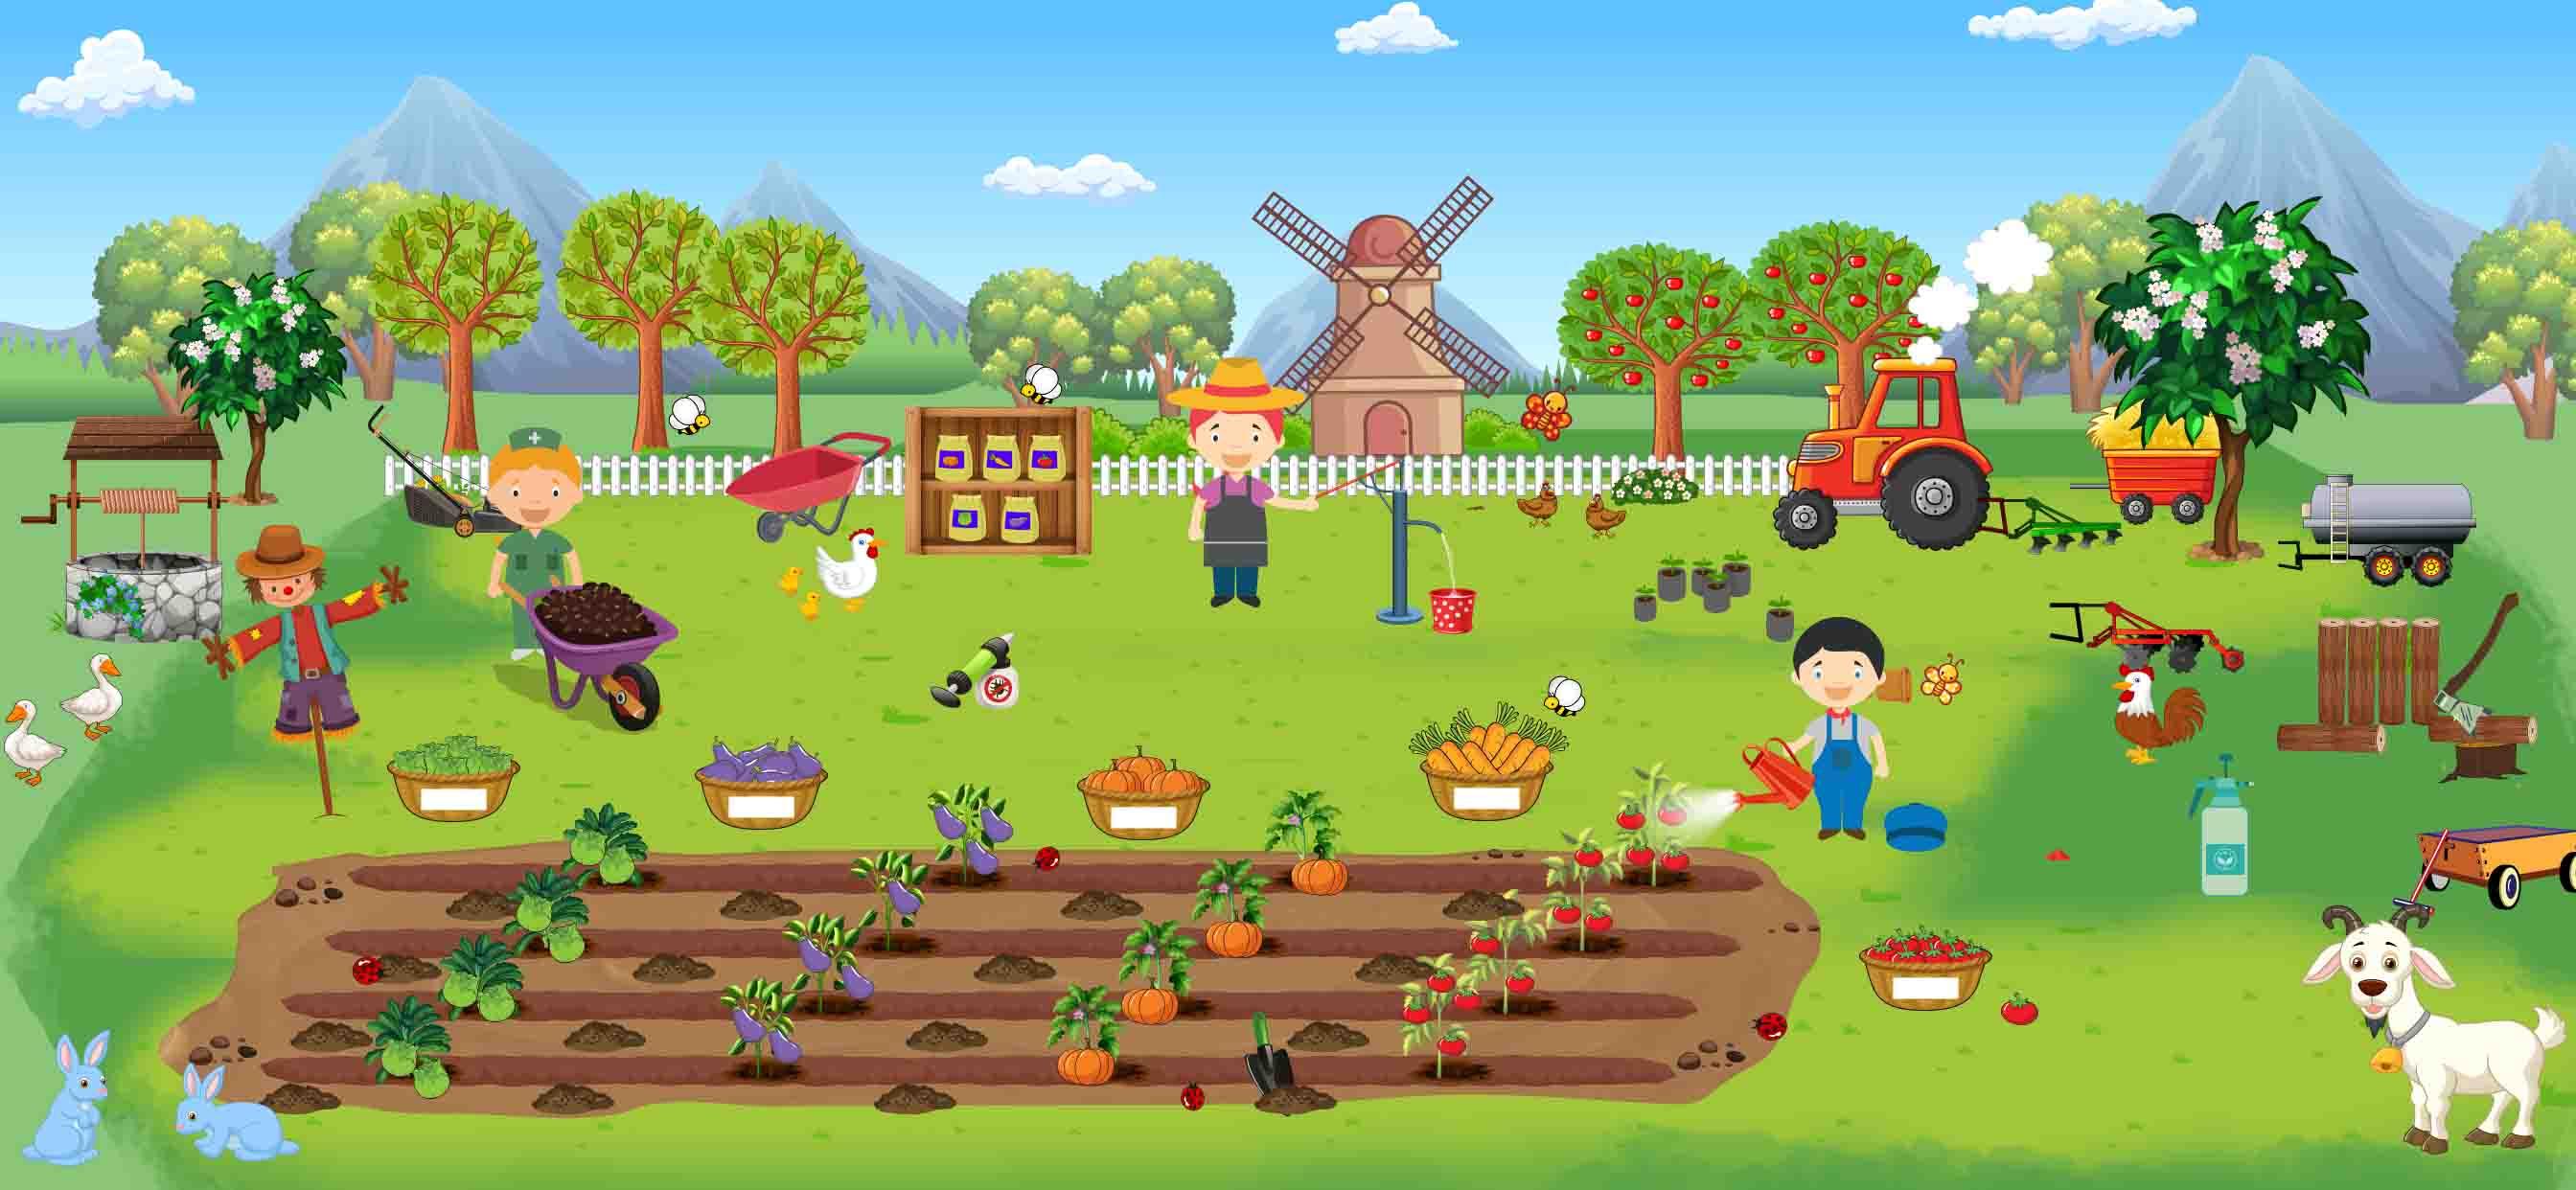 Pretend Town Farm House: Explore Farming World 1.1 Screenshot 7